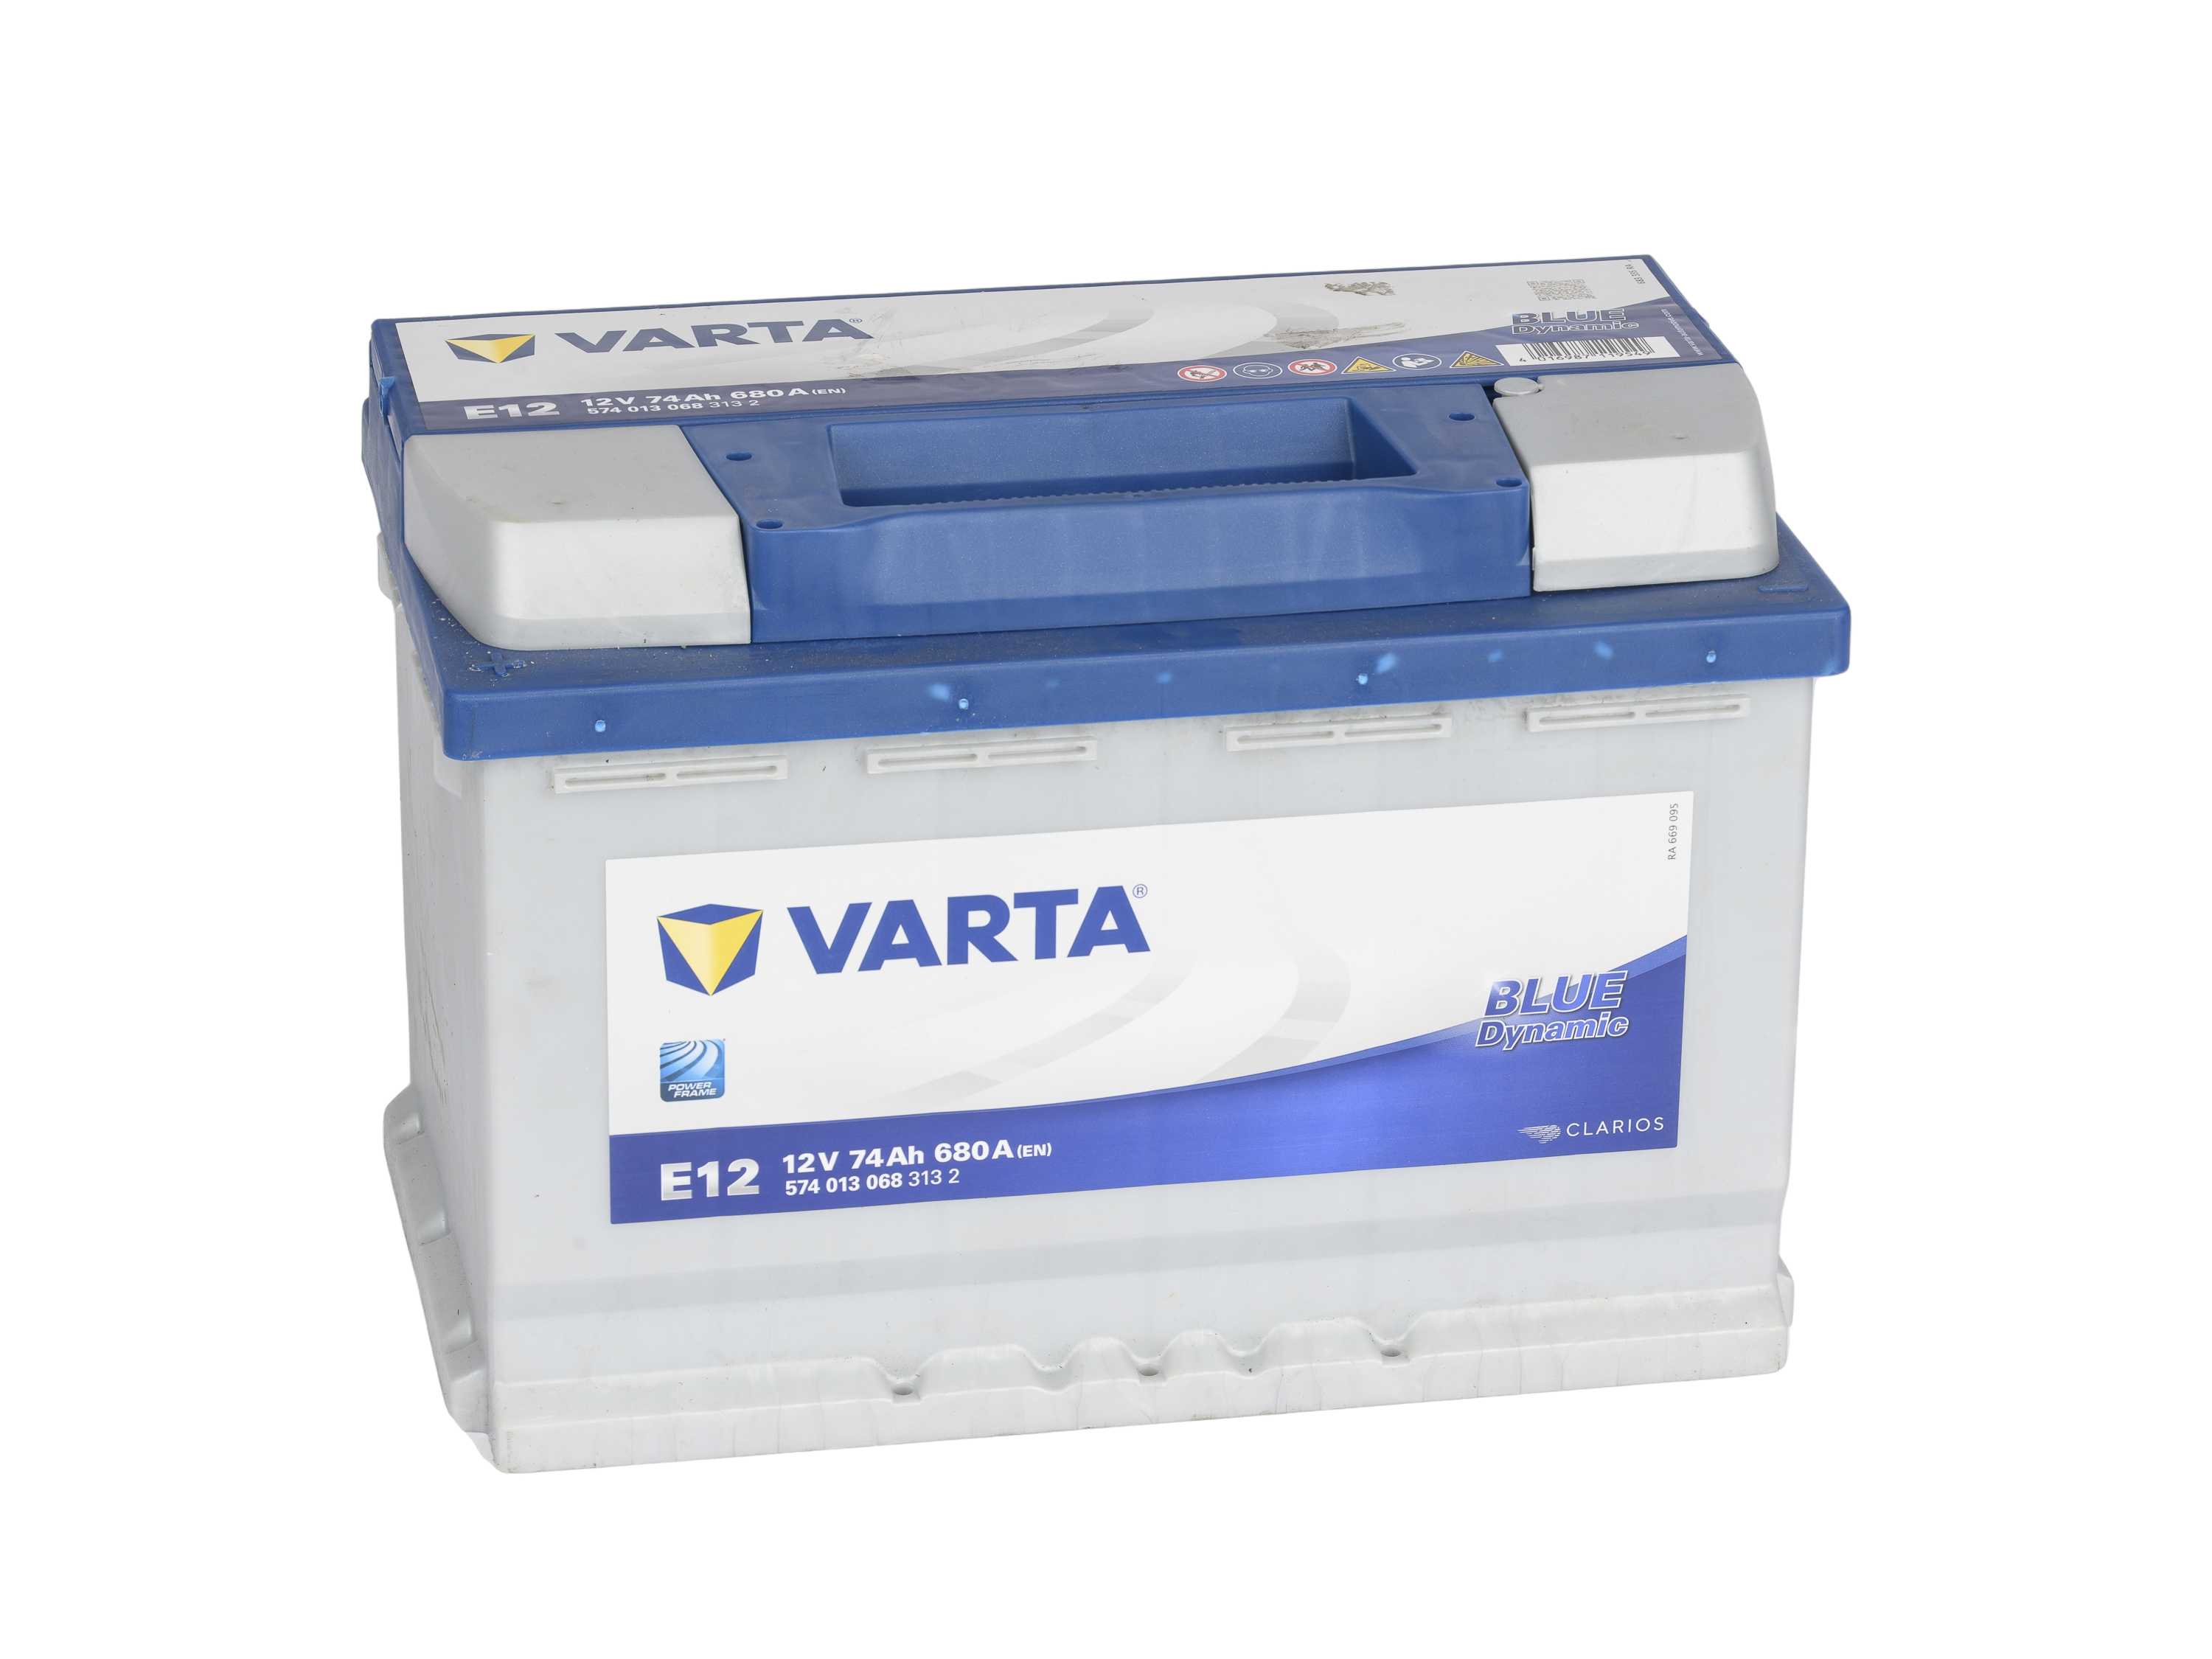 VARTA Blue Dynamic Accu  E12 - 12V 74AH -  574.013.068